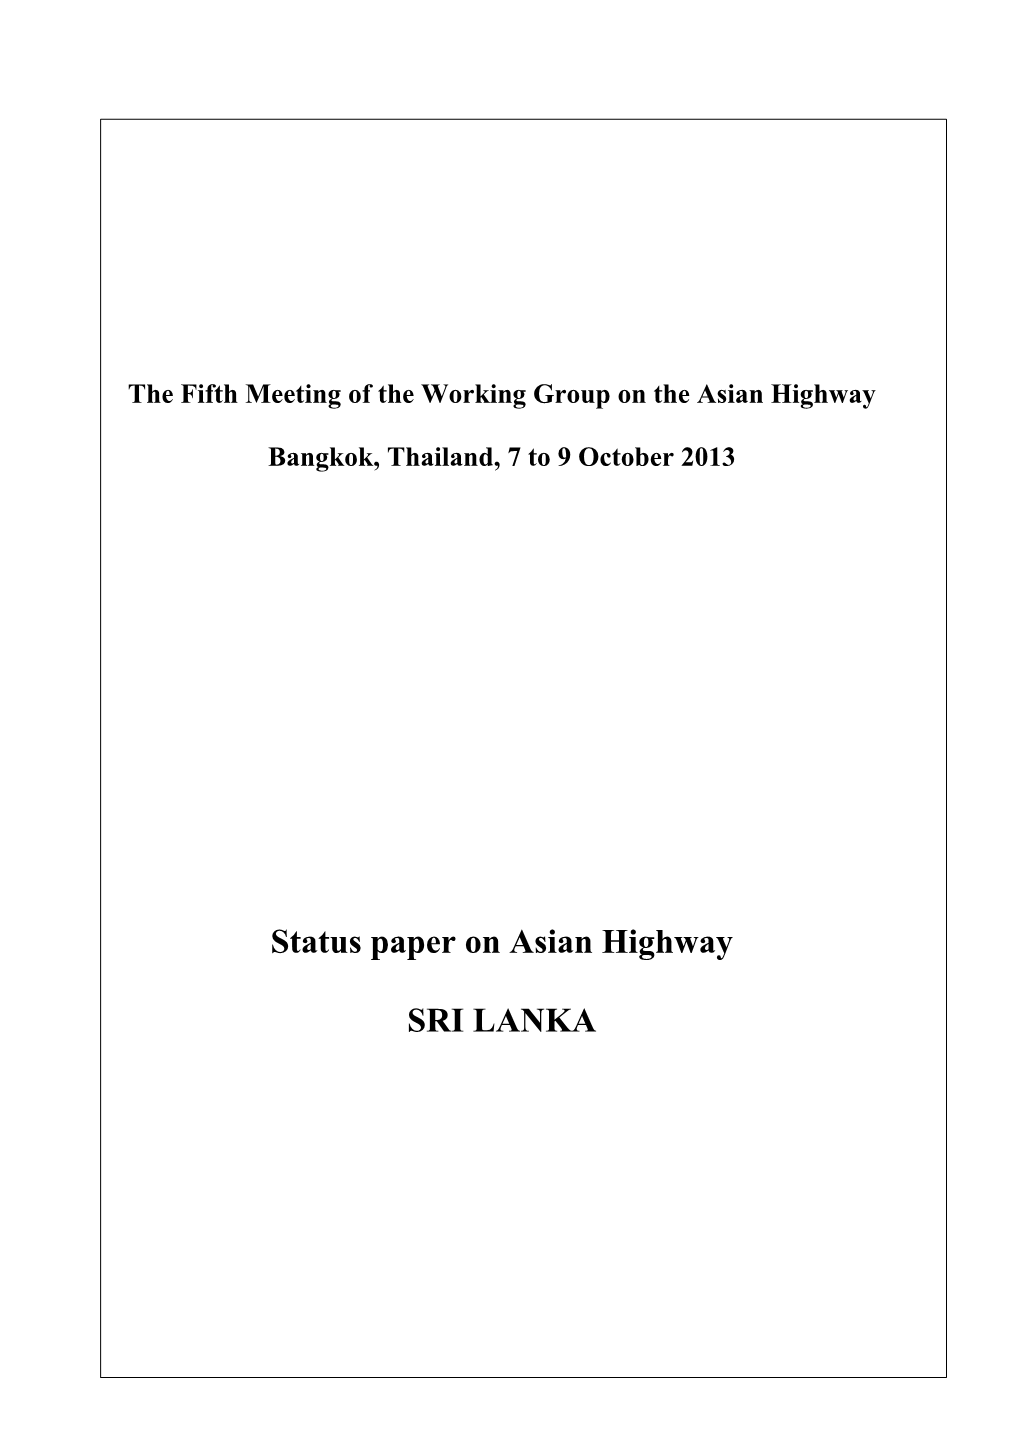 Status Paper on Asian Highway SRI LANKA